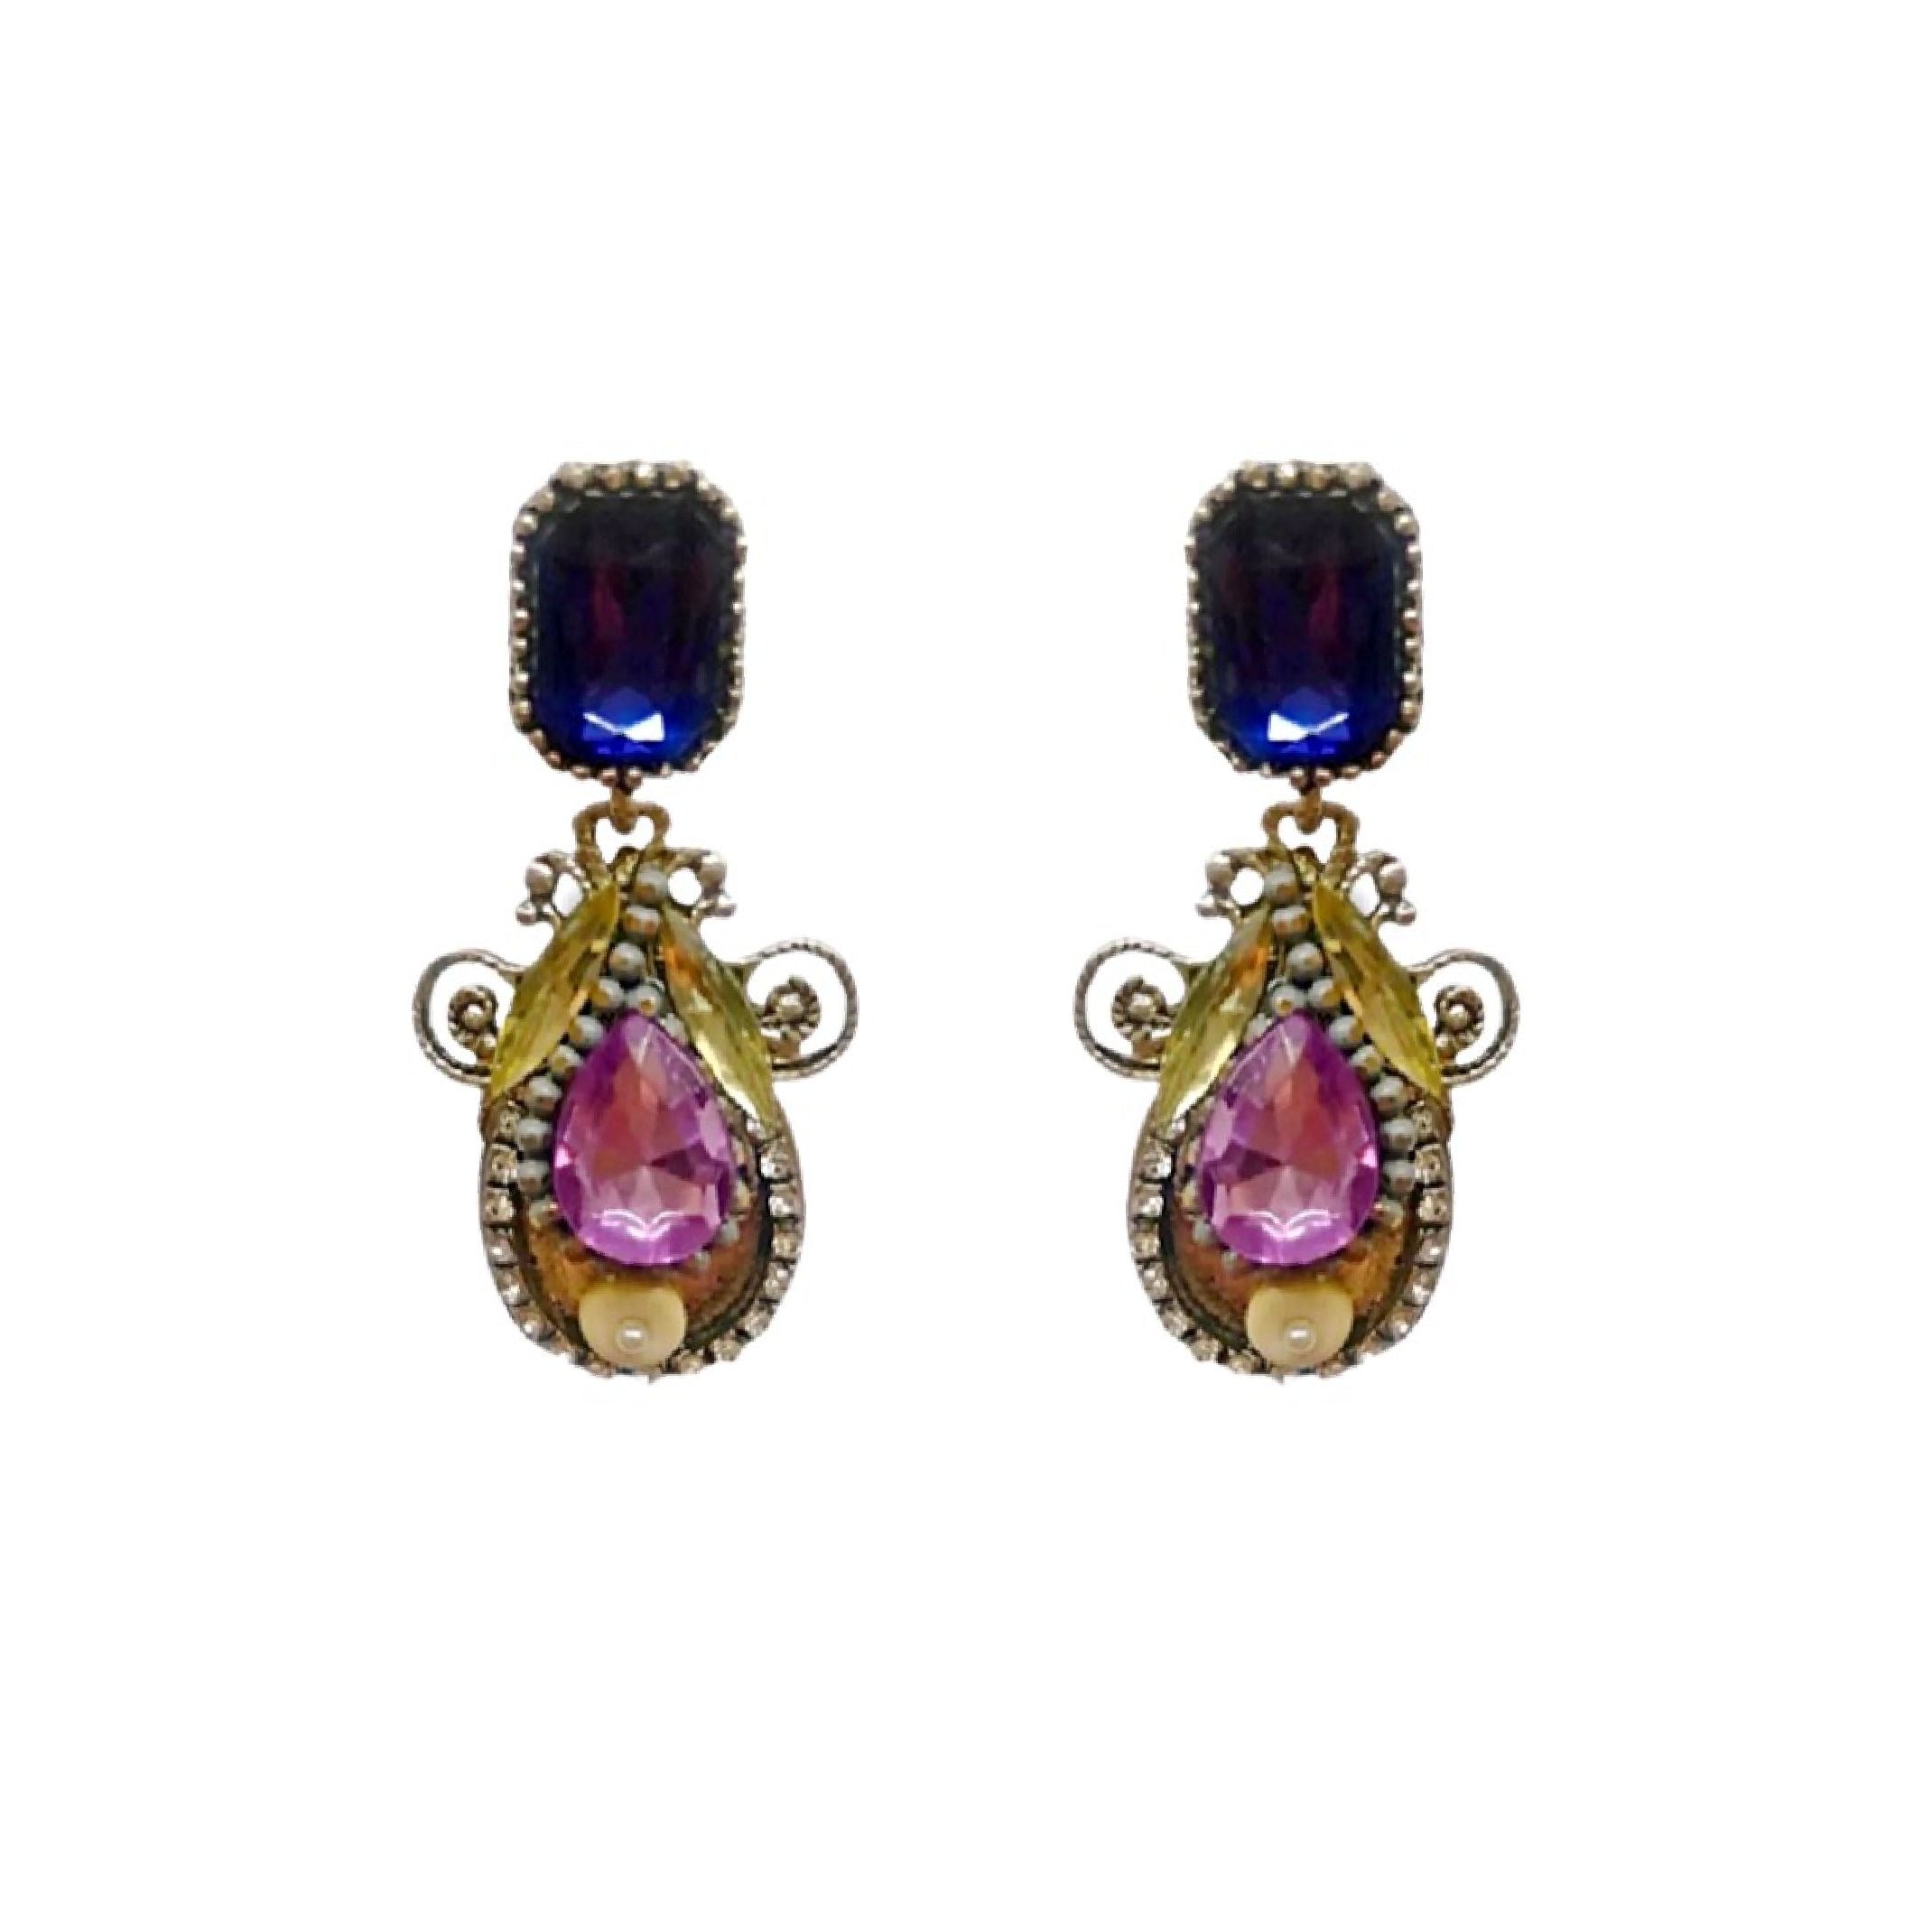 Navy and purple jewel earrings 